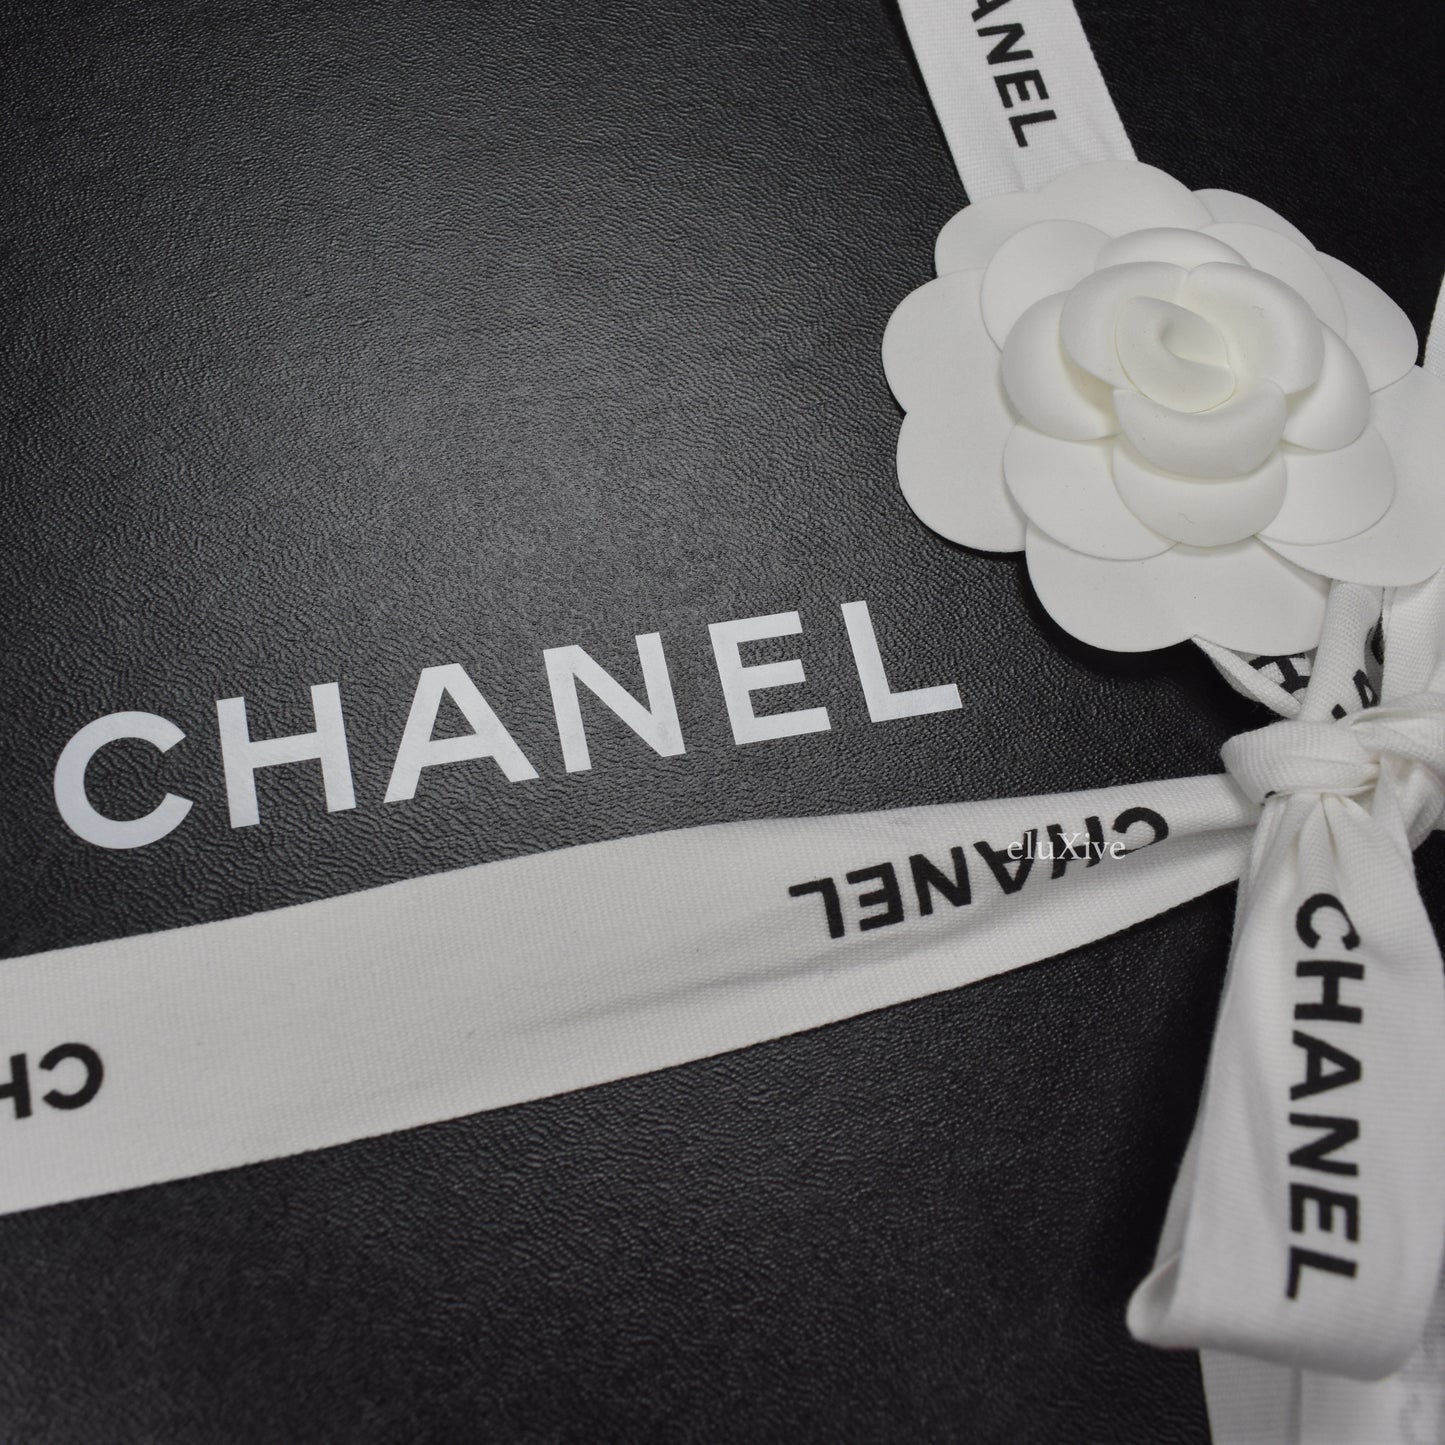 Chanel - Classic Monogram Logo Trainer (White/Blue)